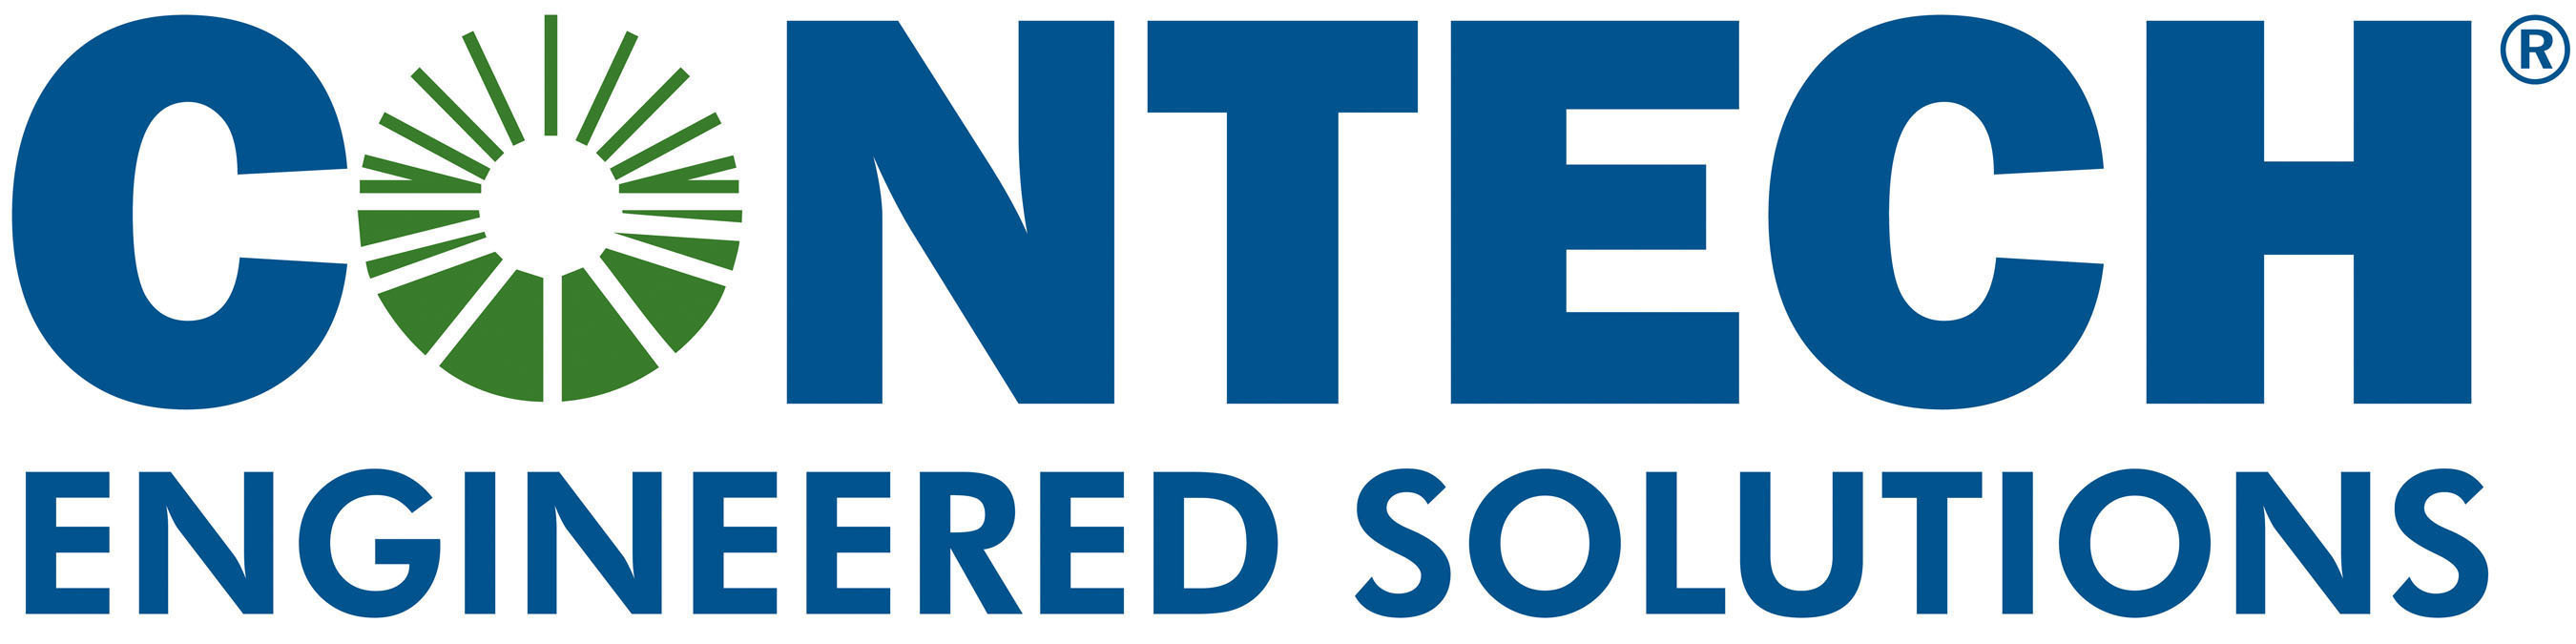 Contech Engineered Solutions logo.